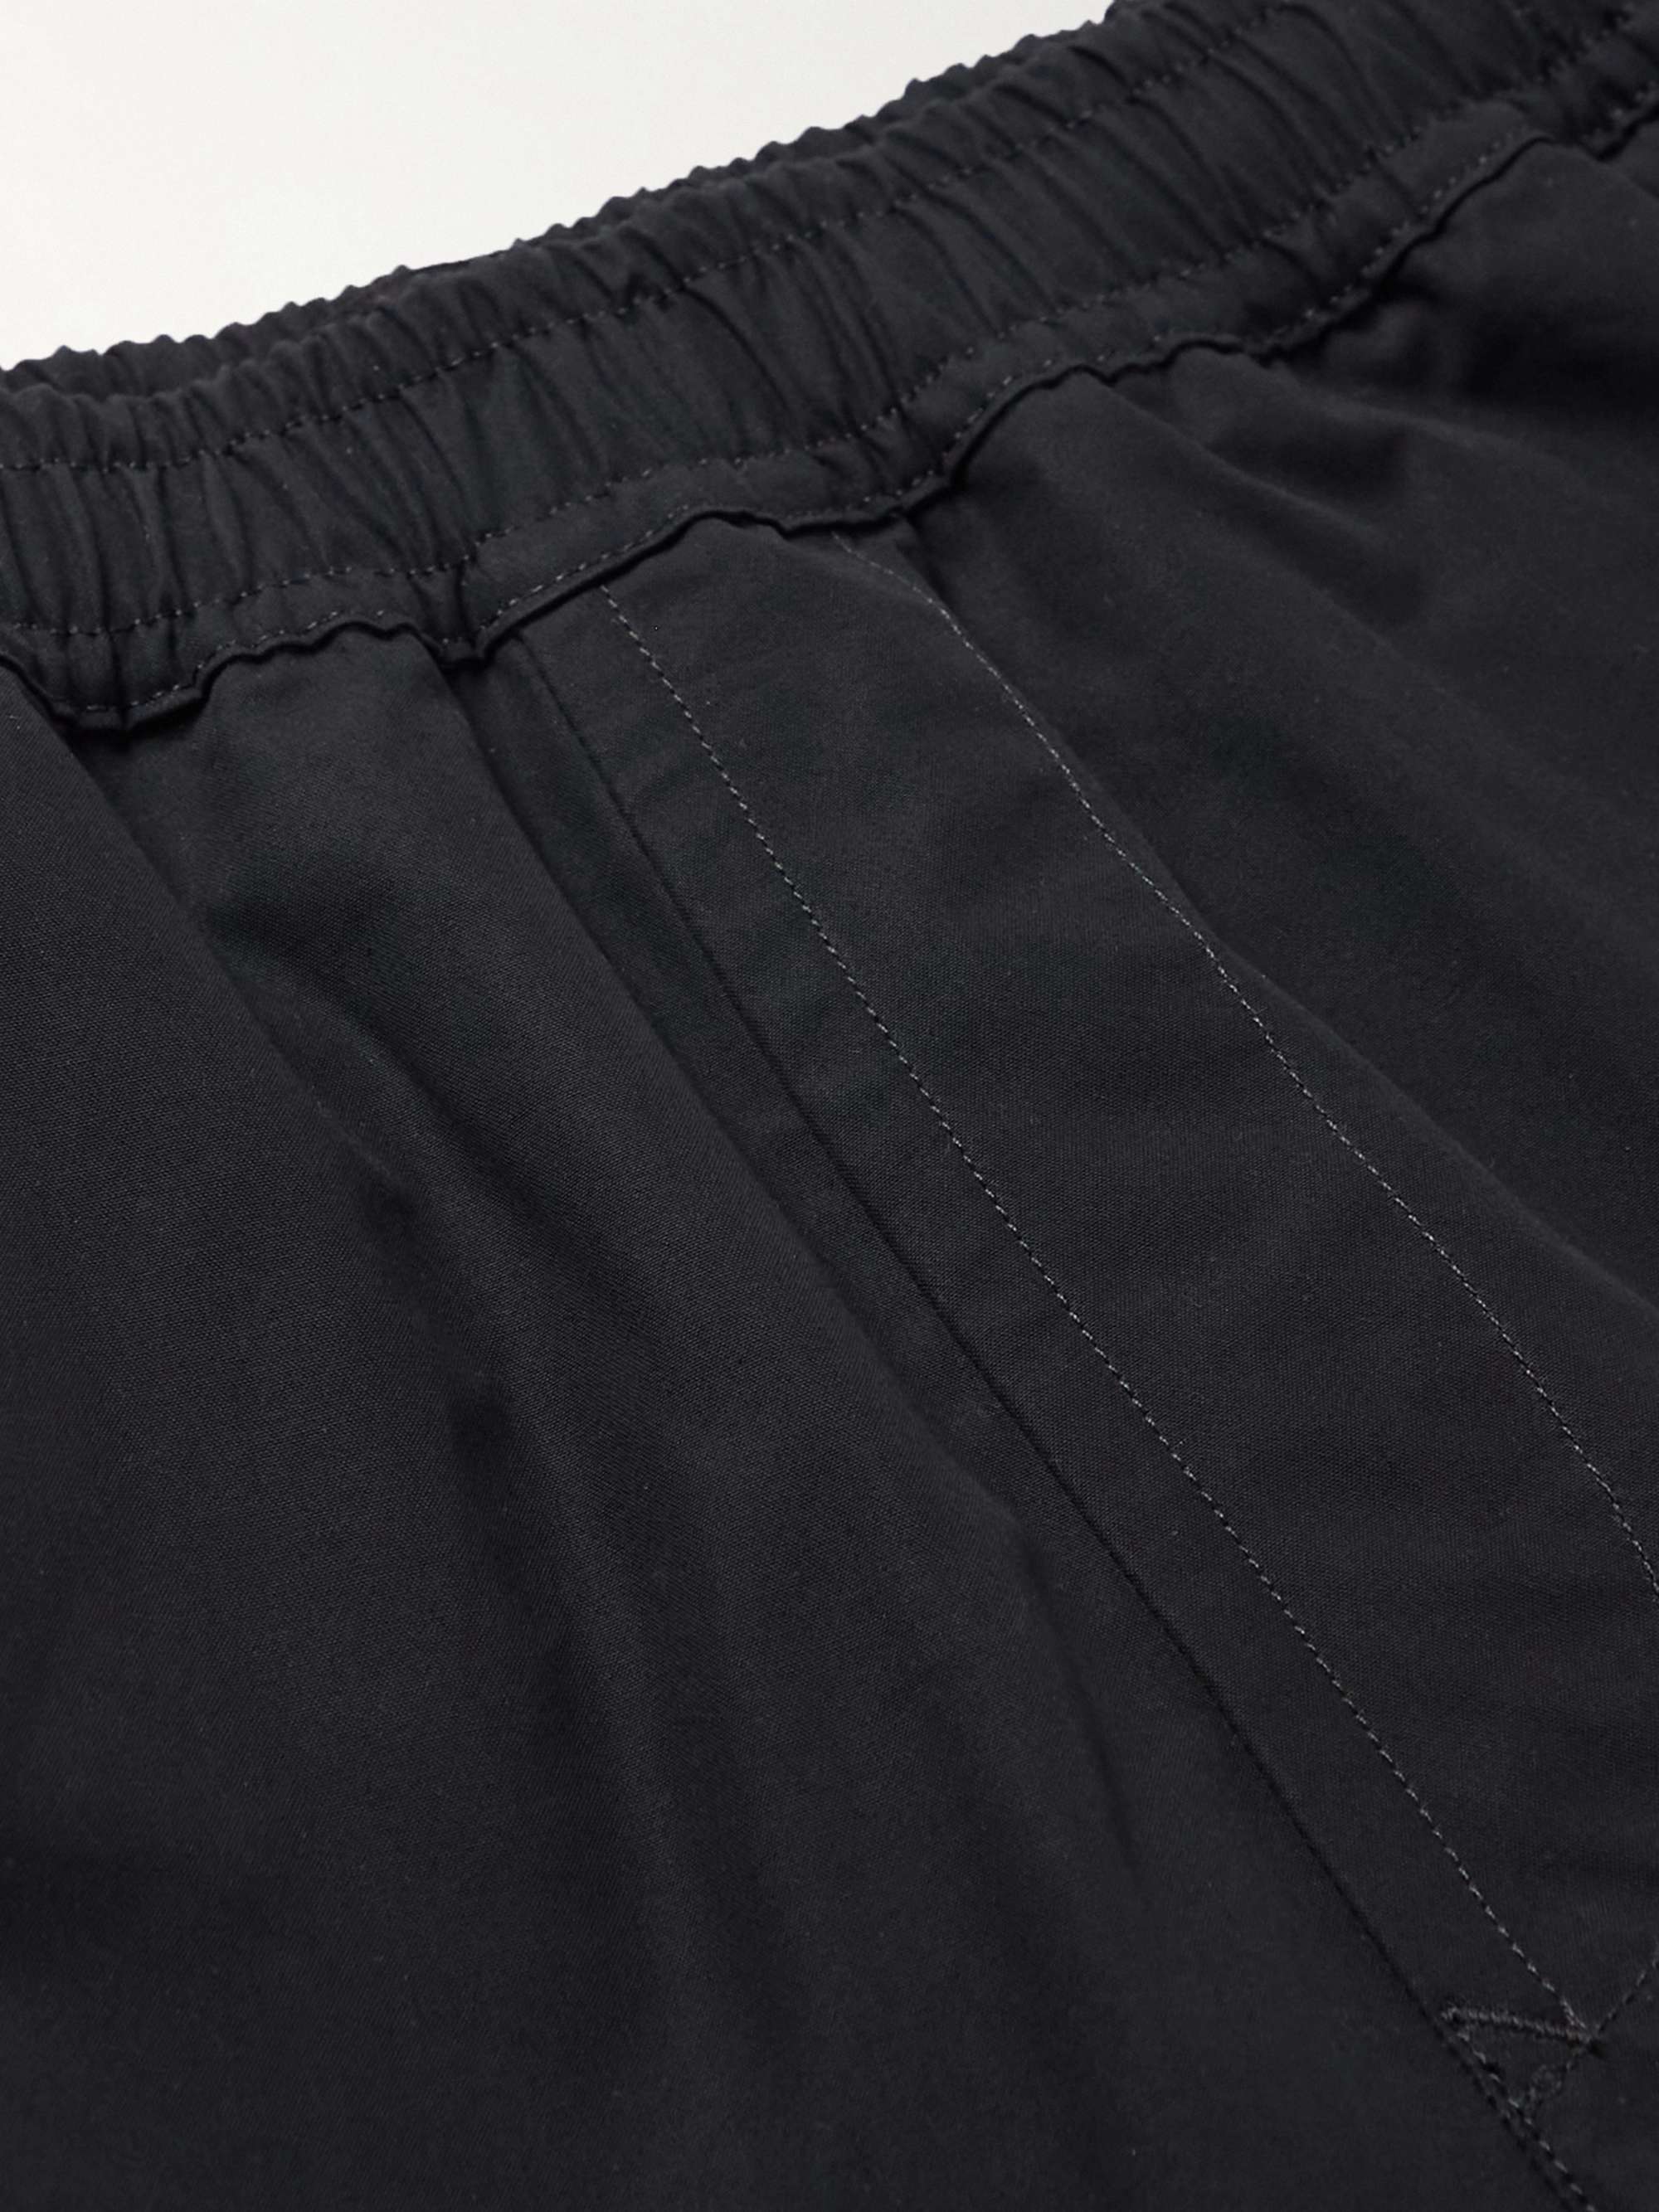 STONE ISLAND Ghost Slim-Fit Cotton-Ventile® Cargo Pants